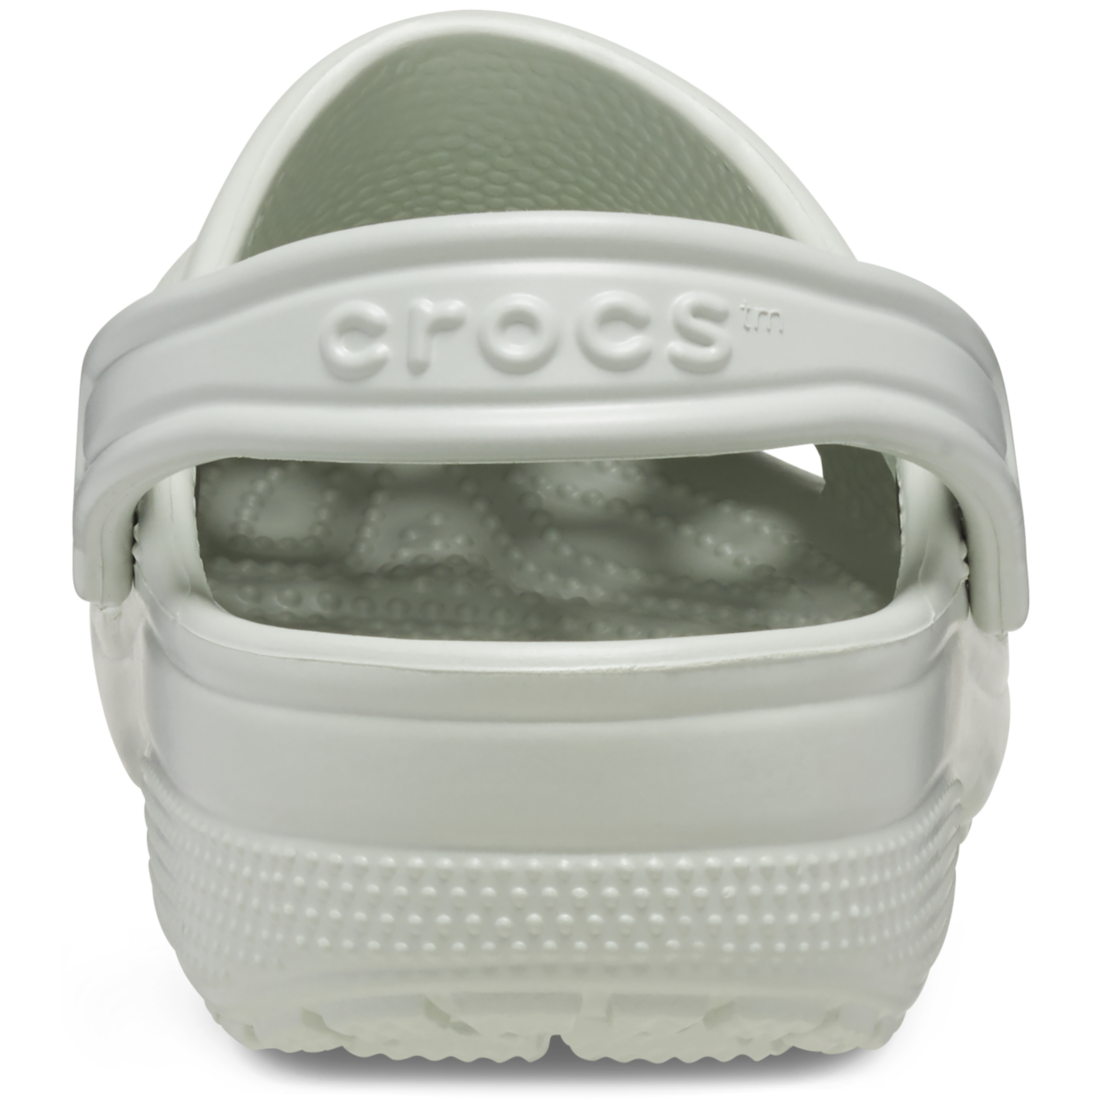 Crocs Classic Plaster